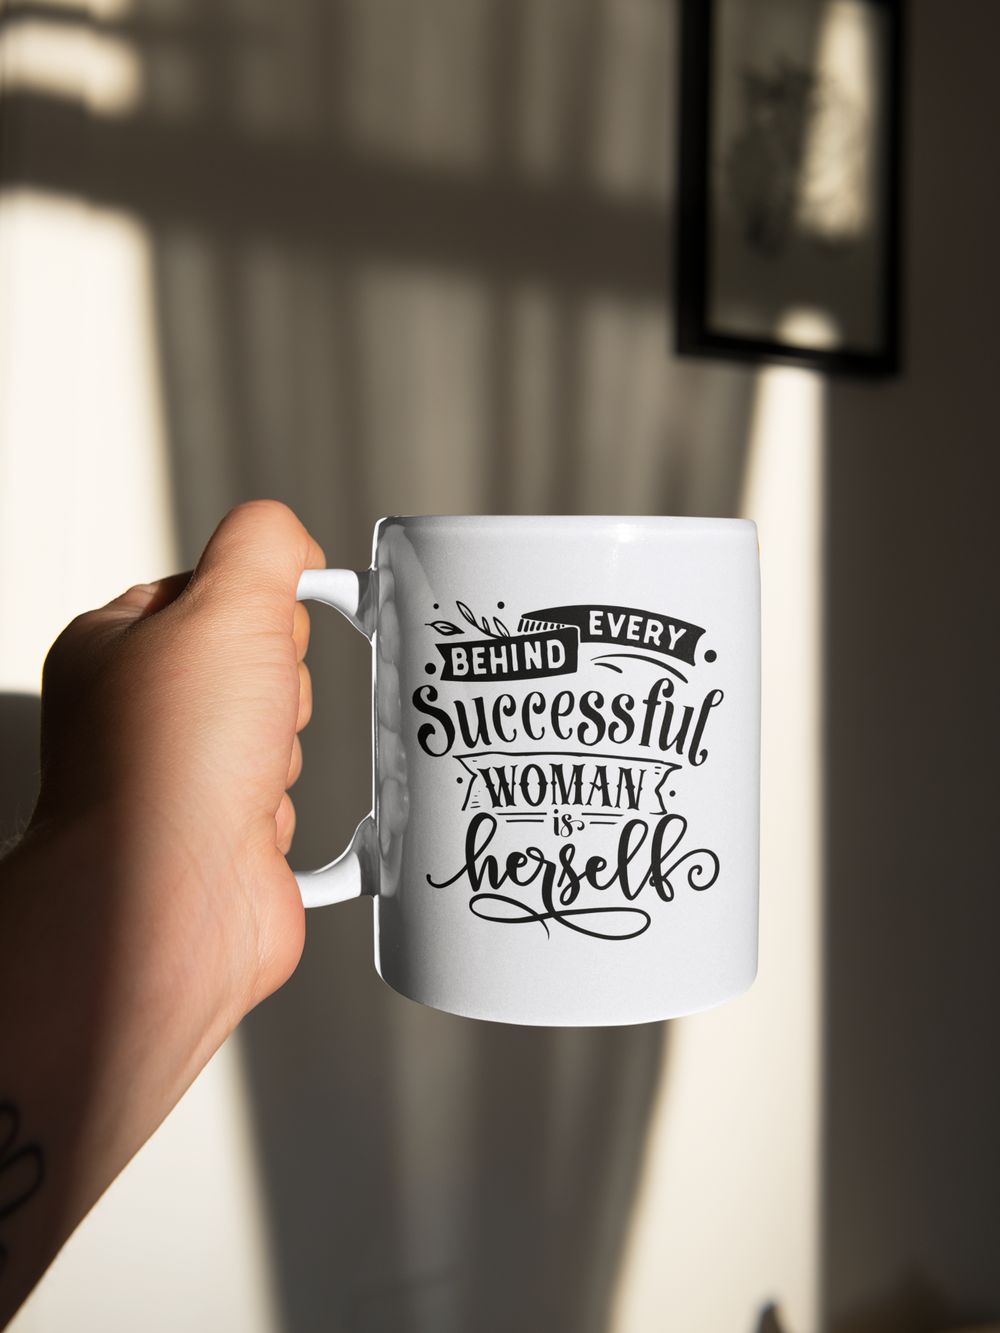 Behind Every Woman Mug